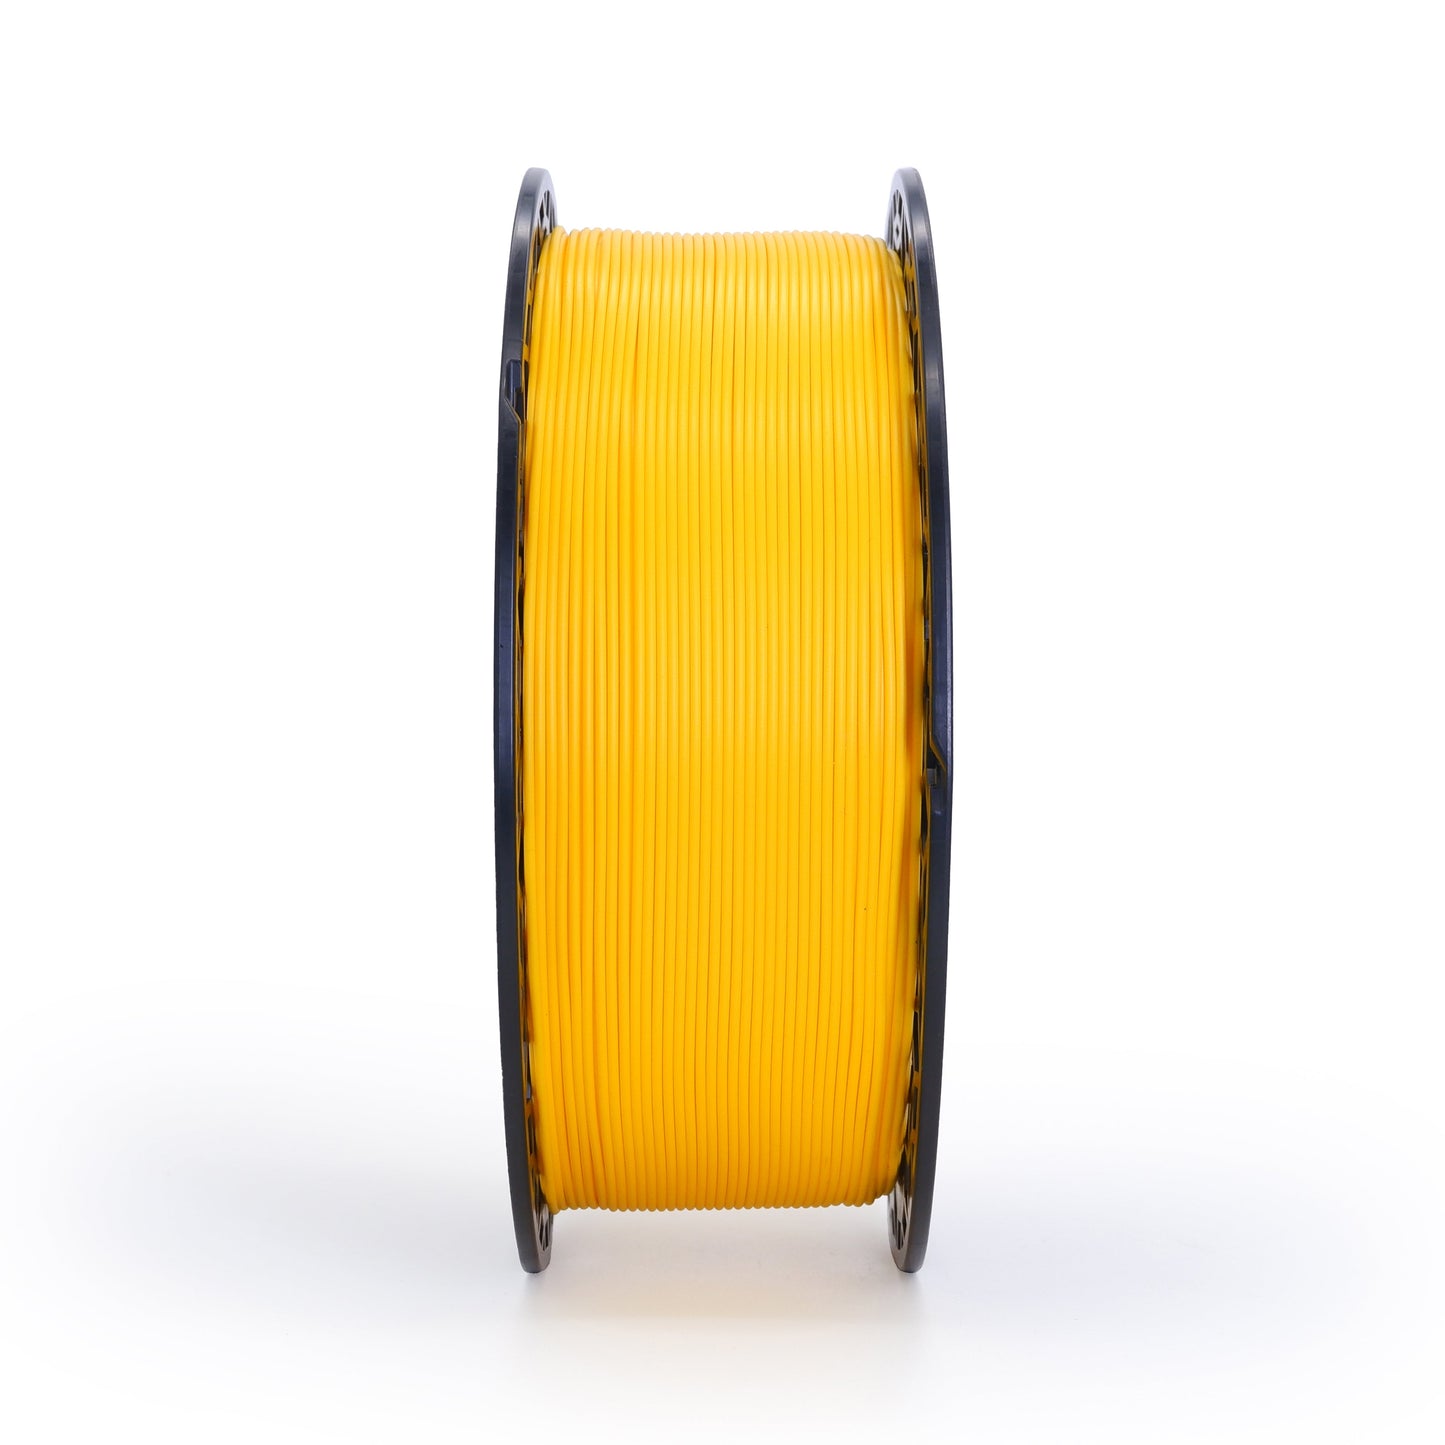 Uzy Pro PLA Filament 1.75mm ± 0.02mm Gold Yellow 1Kg